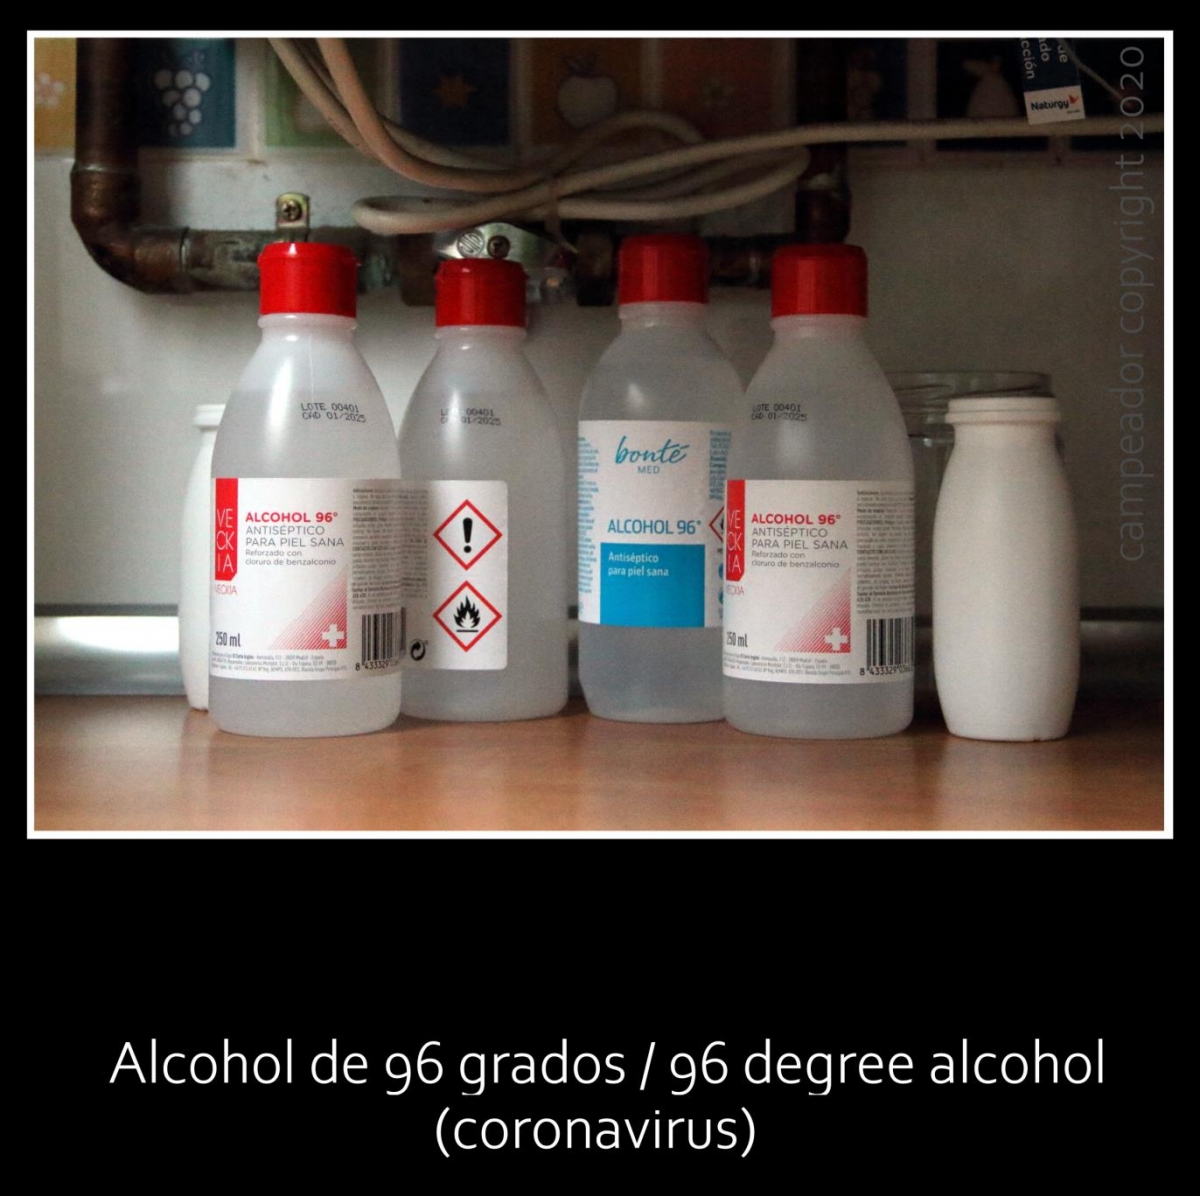 Alcohol de 96 grados- 96 degree alcohol (coronavirus). Photography by Mario Cid (Campeador)